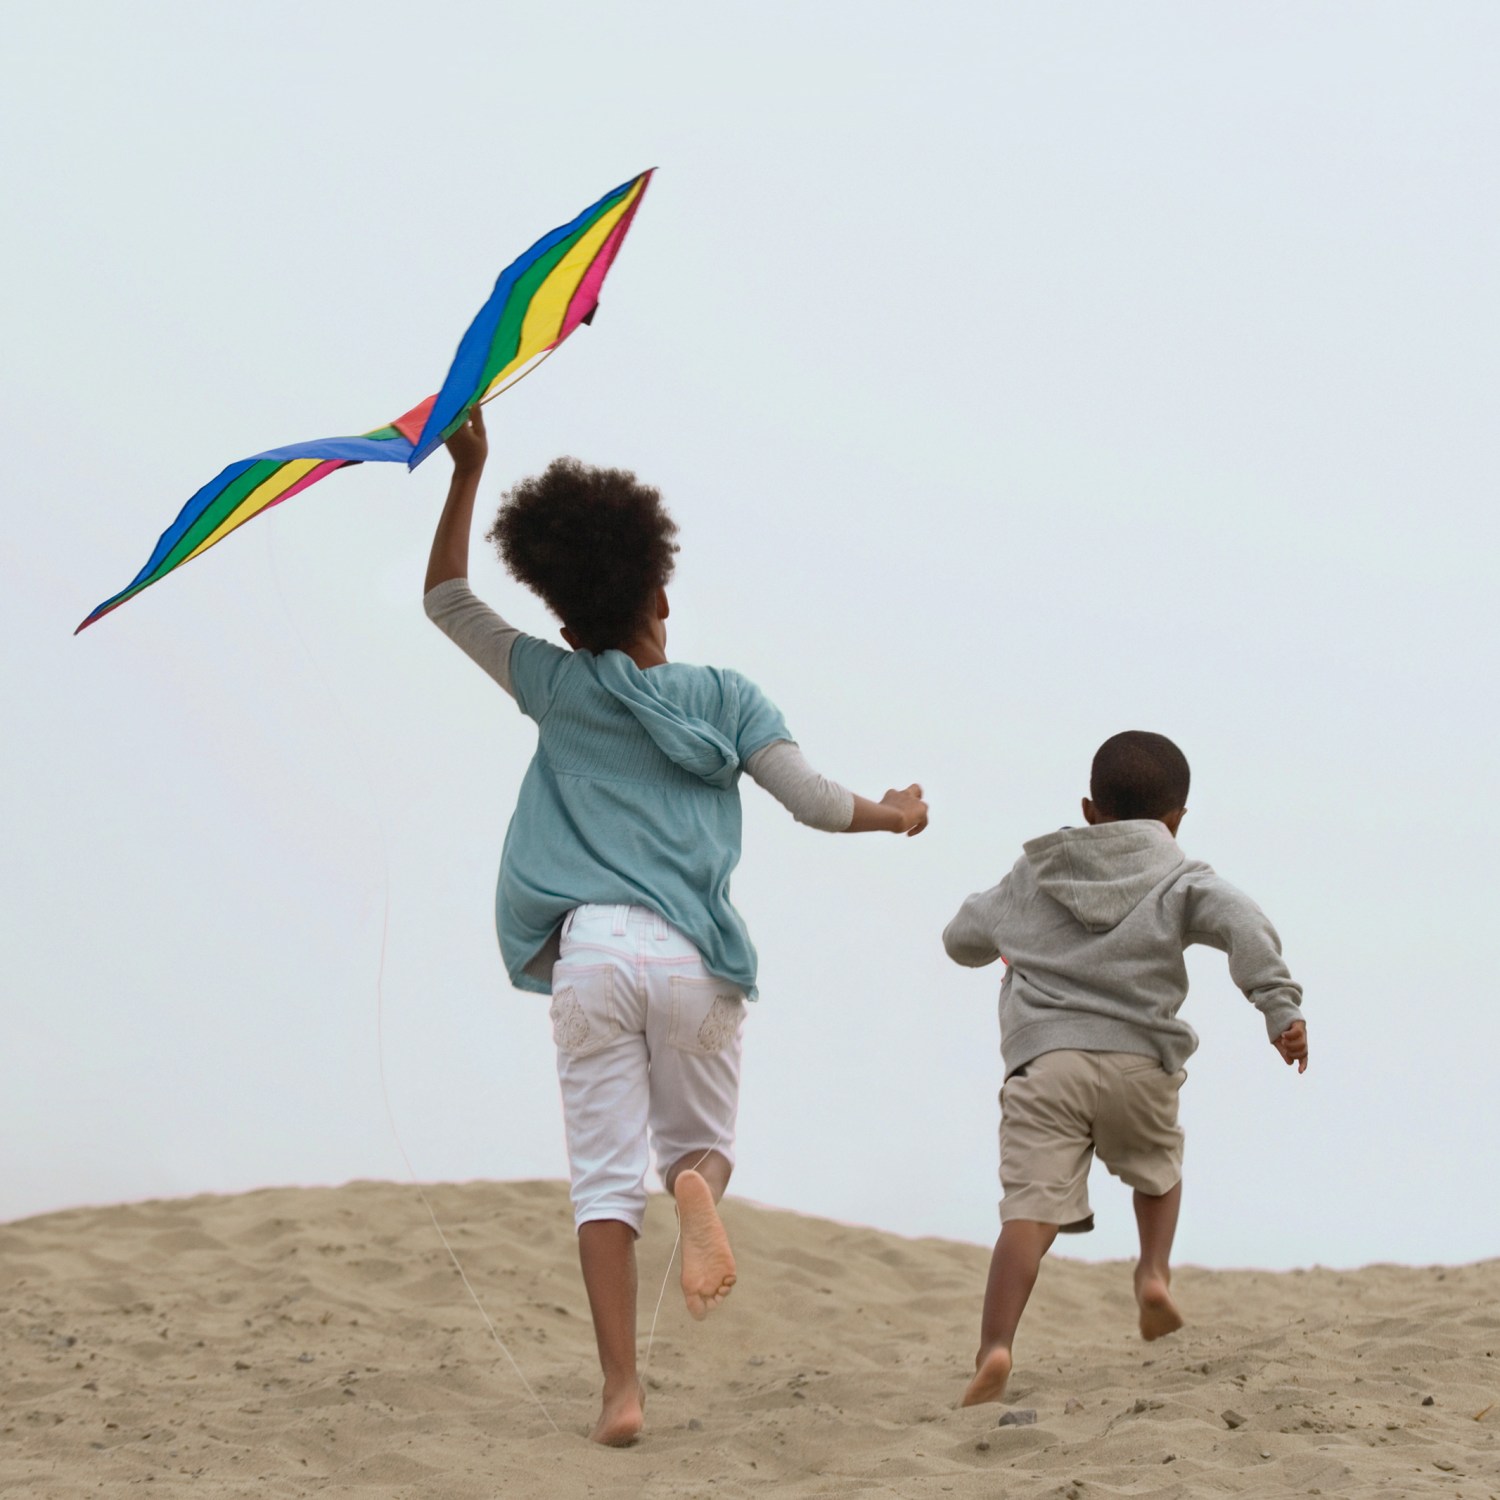 Kids flying kites at the beach